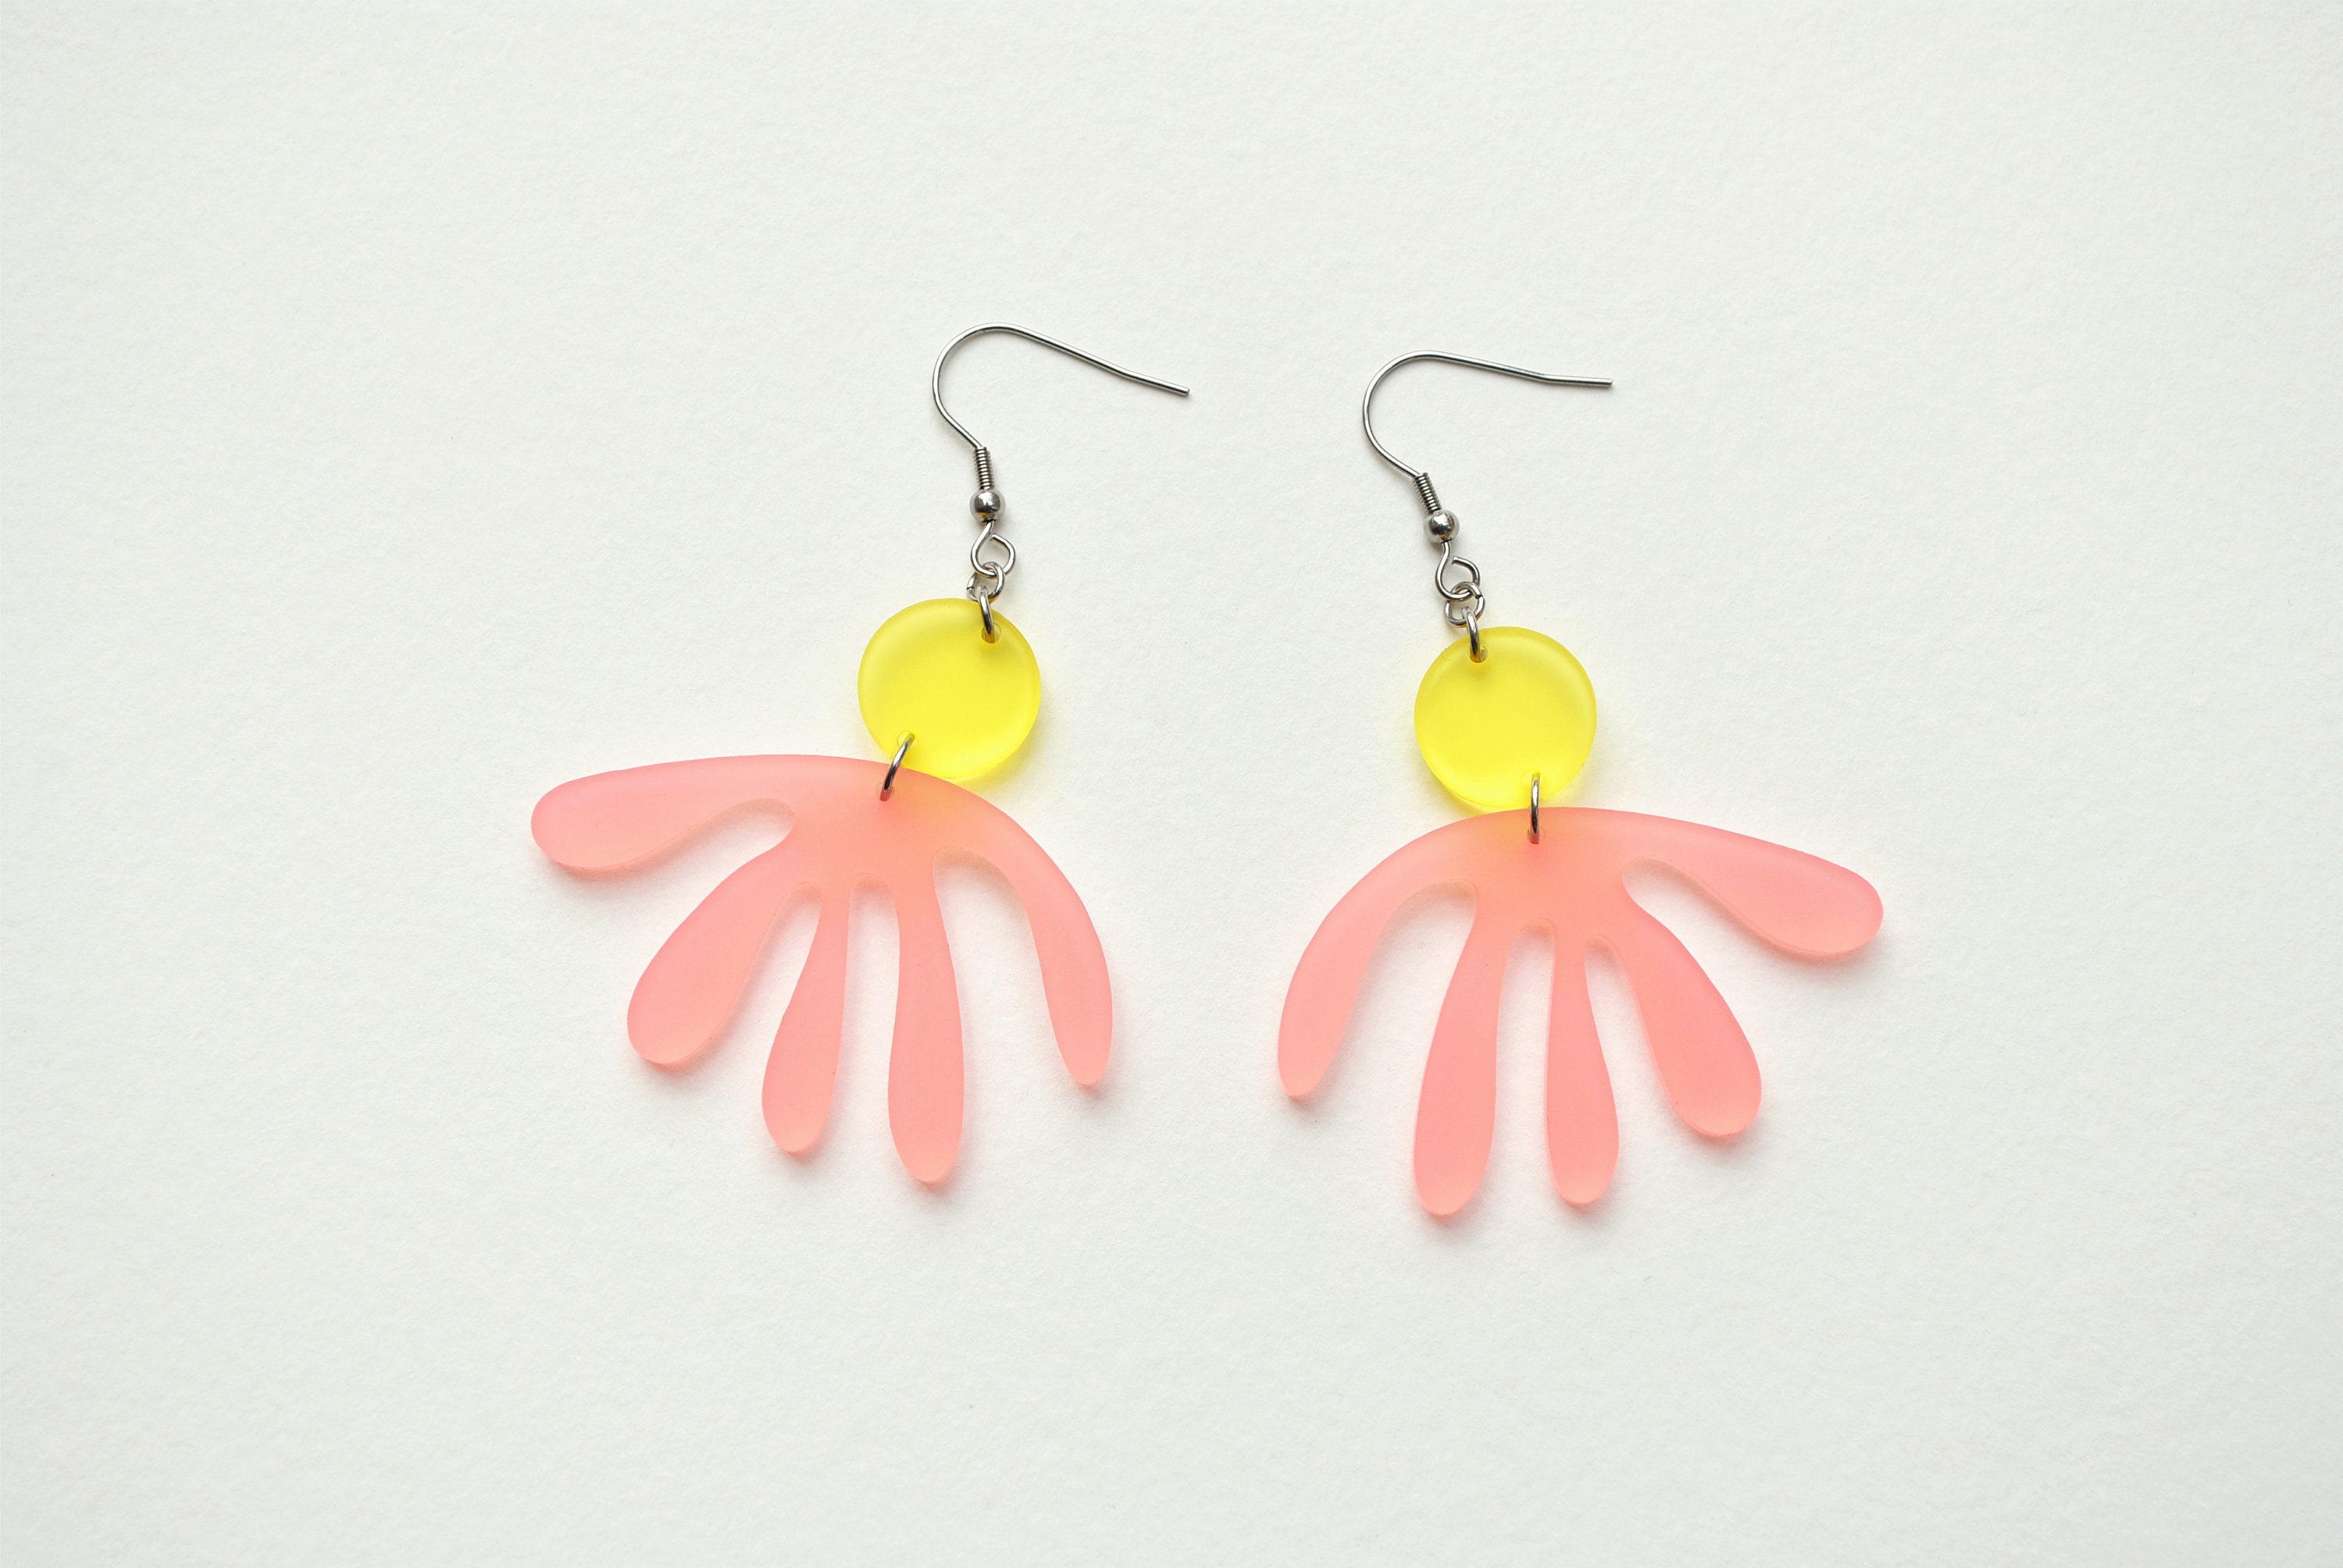 Yellow and fuchsia seaweed earrings art inspired earrings Matisse inspired earrings gift for her fuchsia and yellow earrings